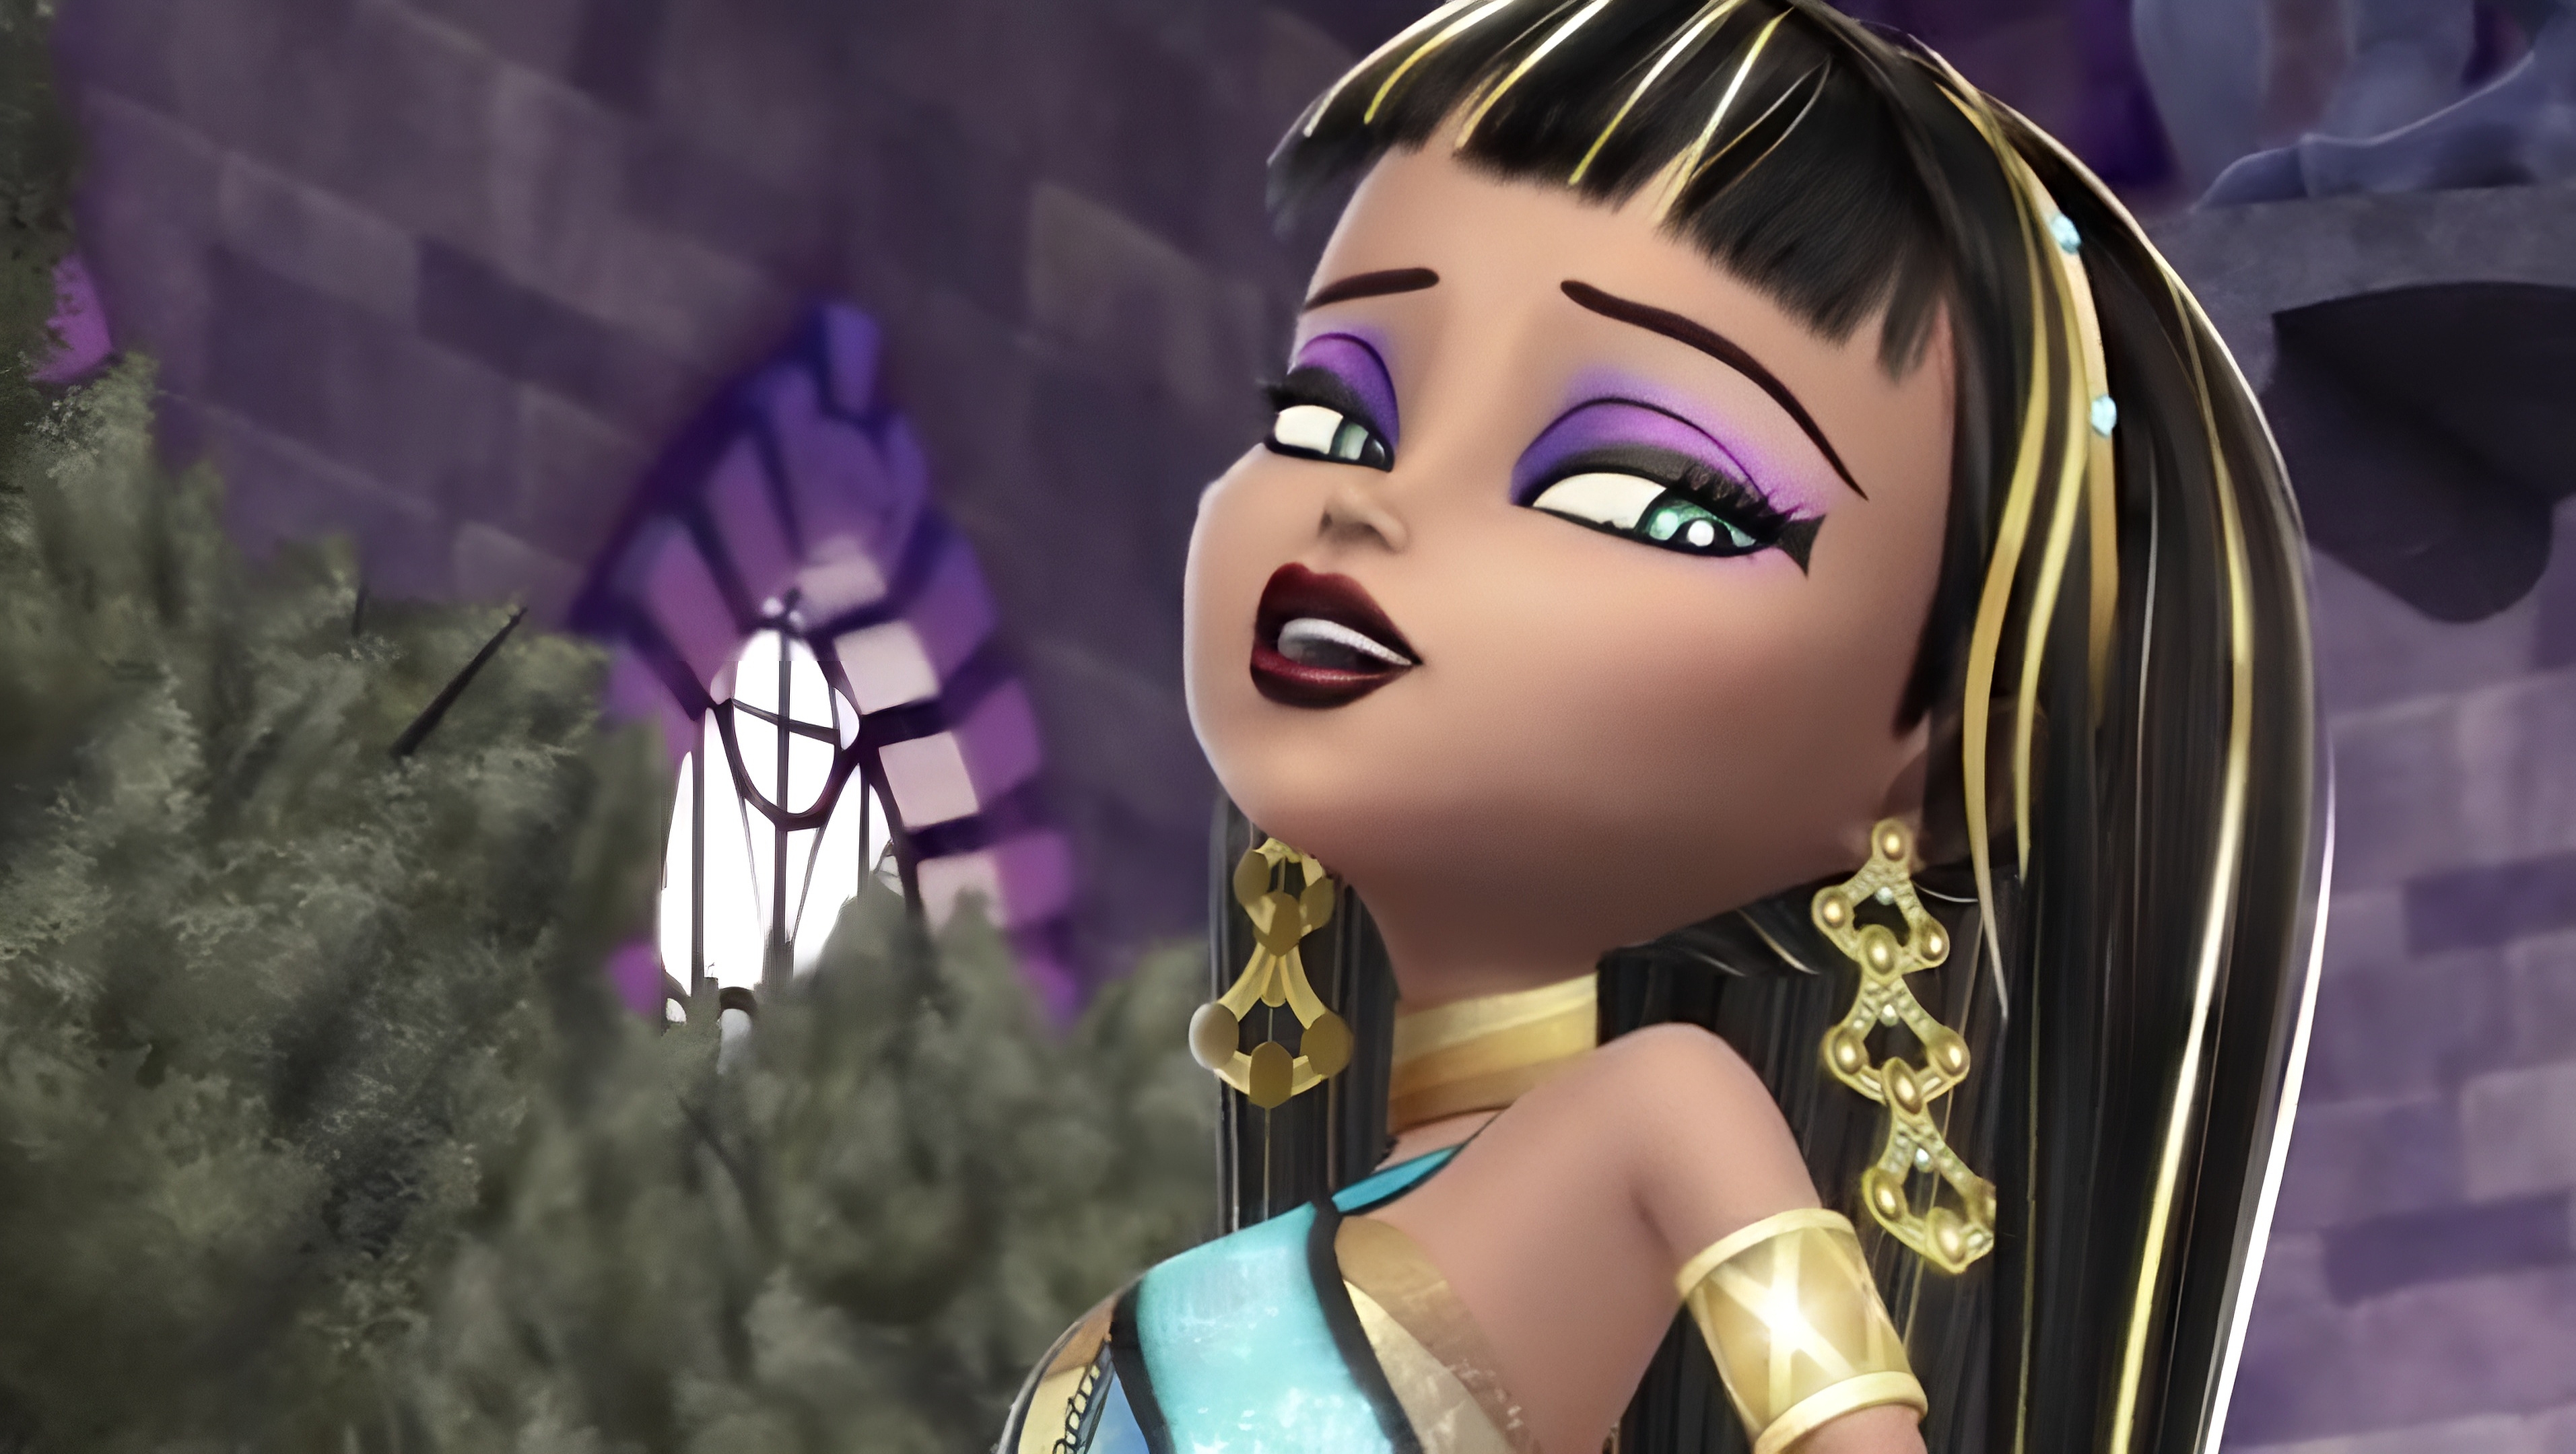 Monster High - Cleo de Nile by Jaz-Merigold on DeviantArt